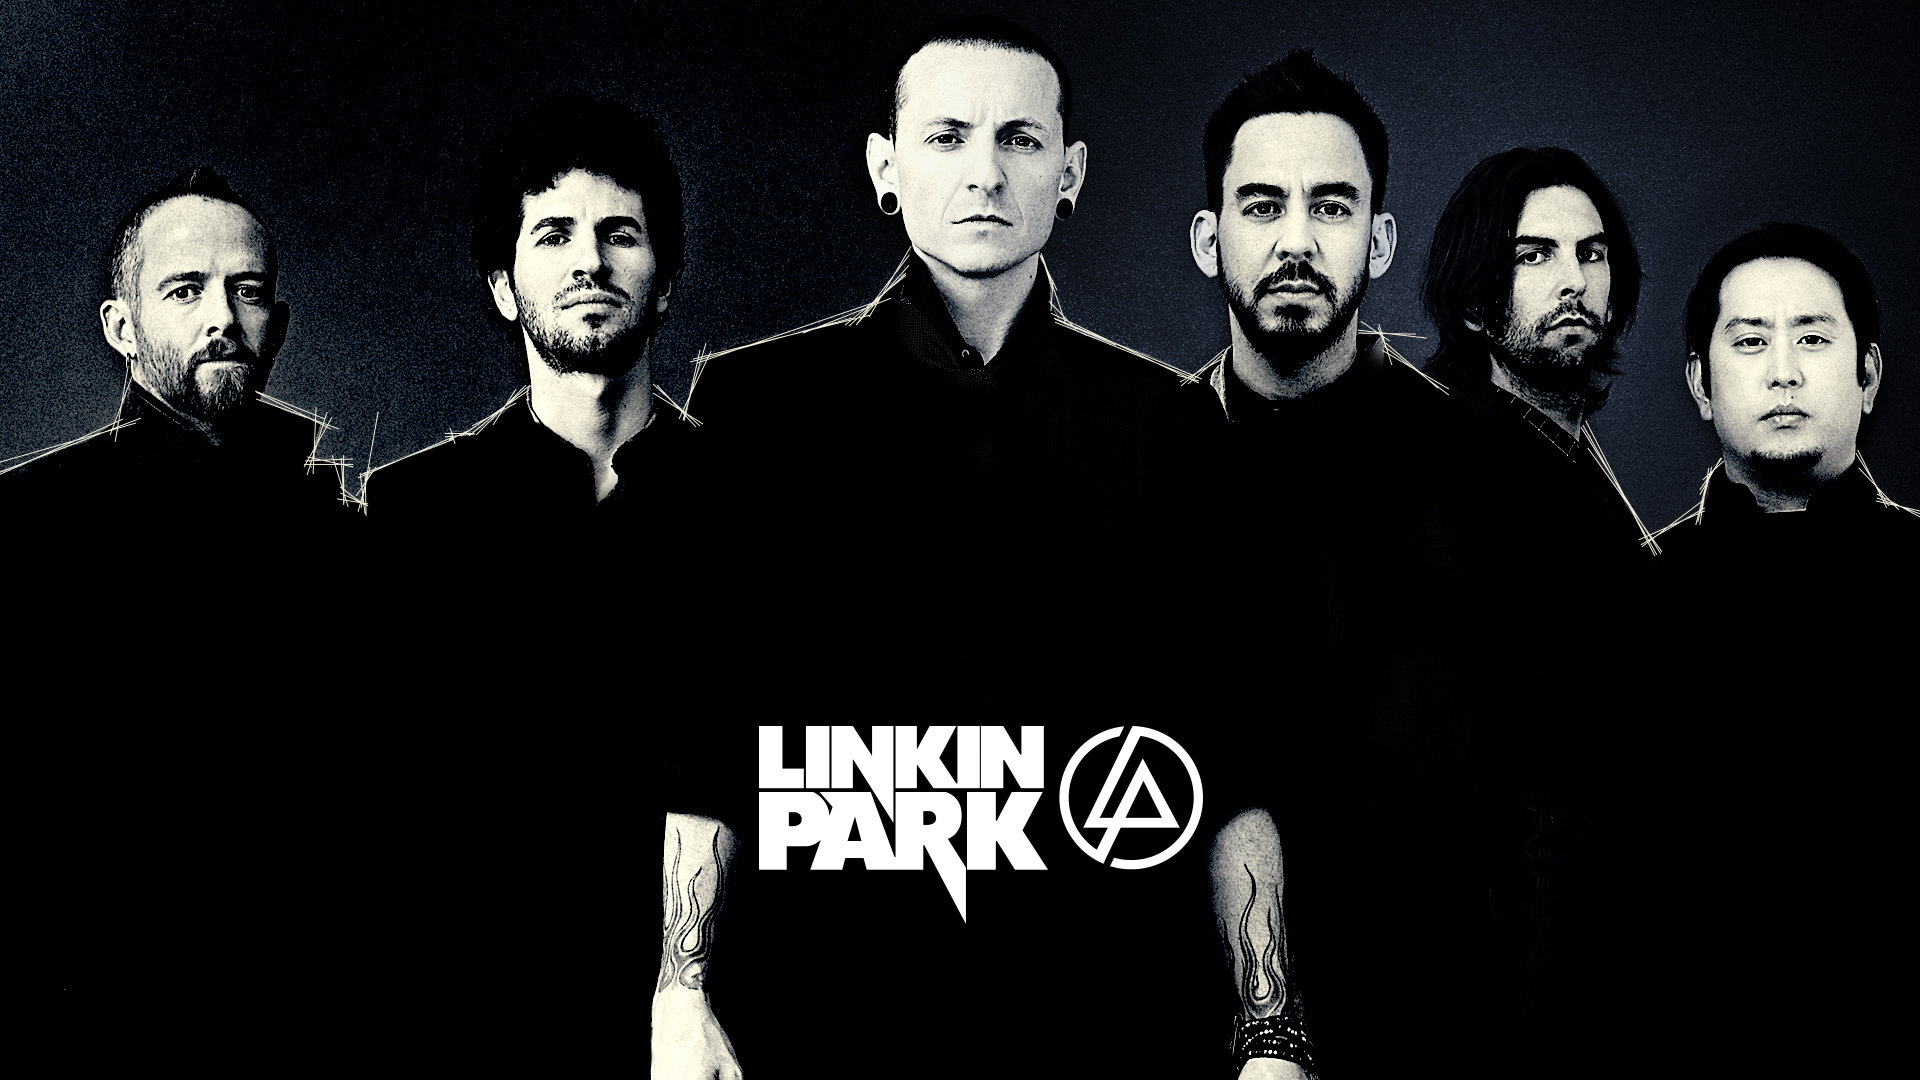 Download full hd Linkin Park desktop background ID:69124 for free